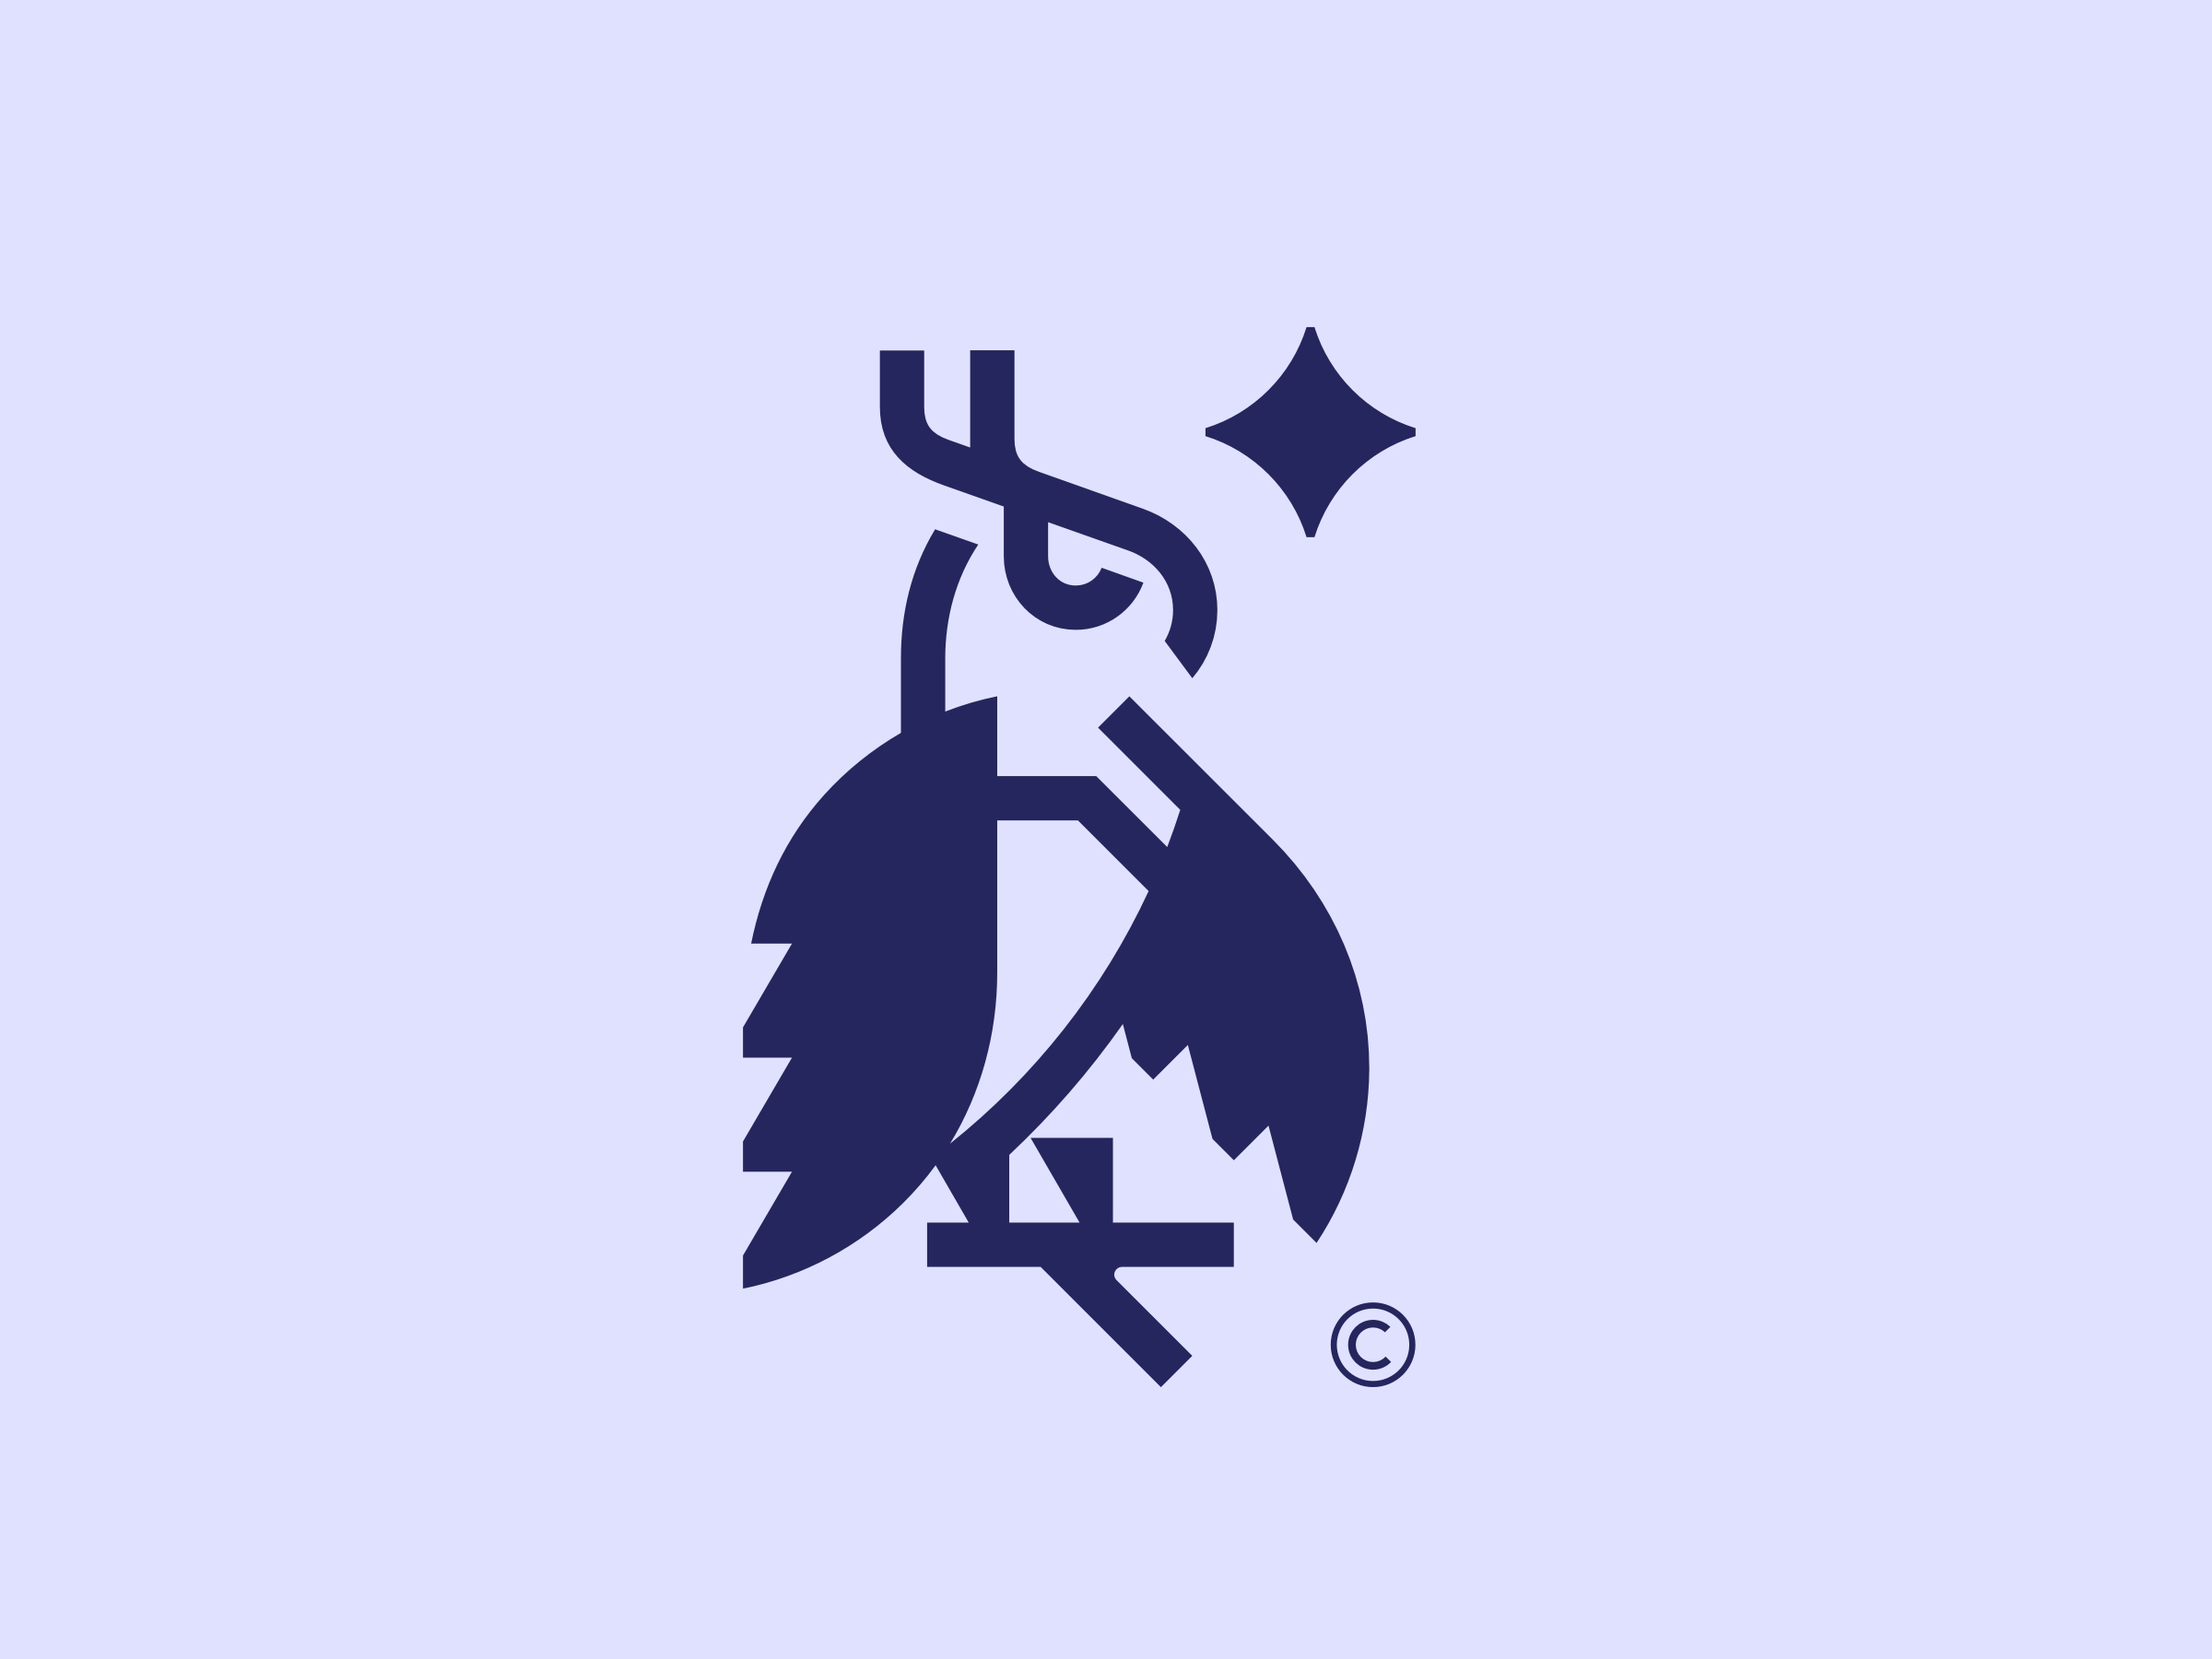 10 Bird Logo Design Inspirations for Brand Identity Design